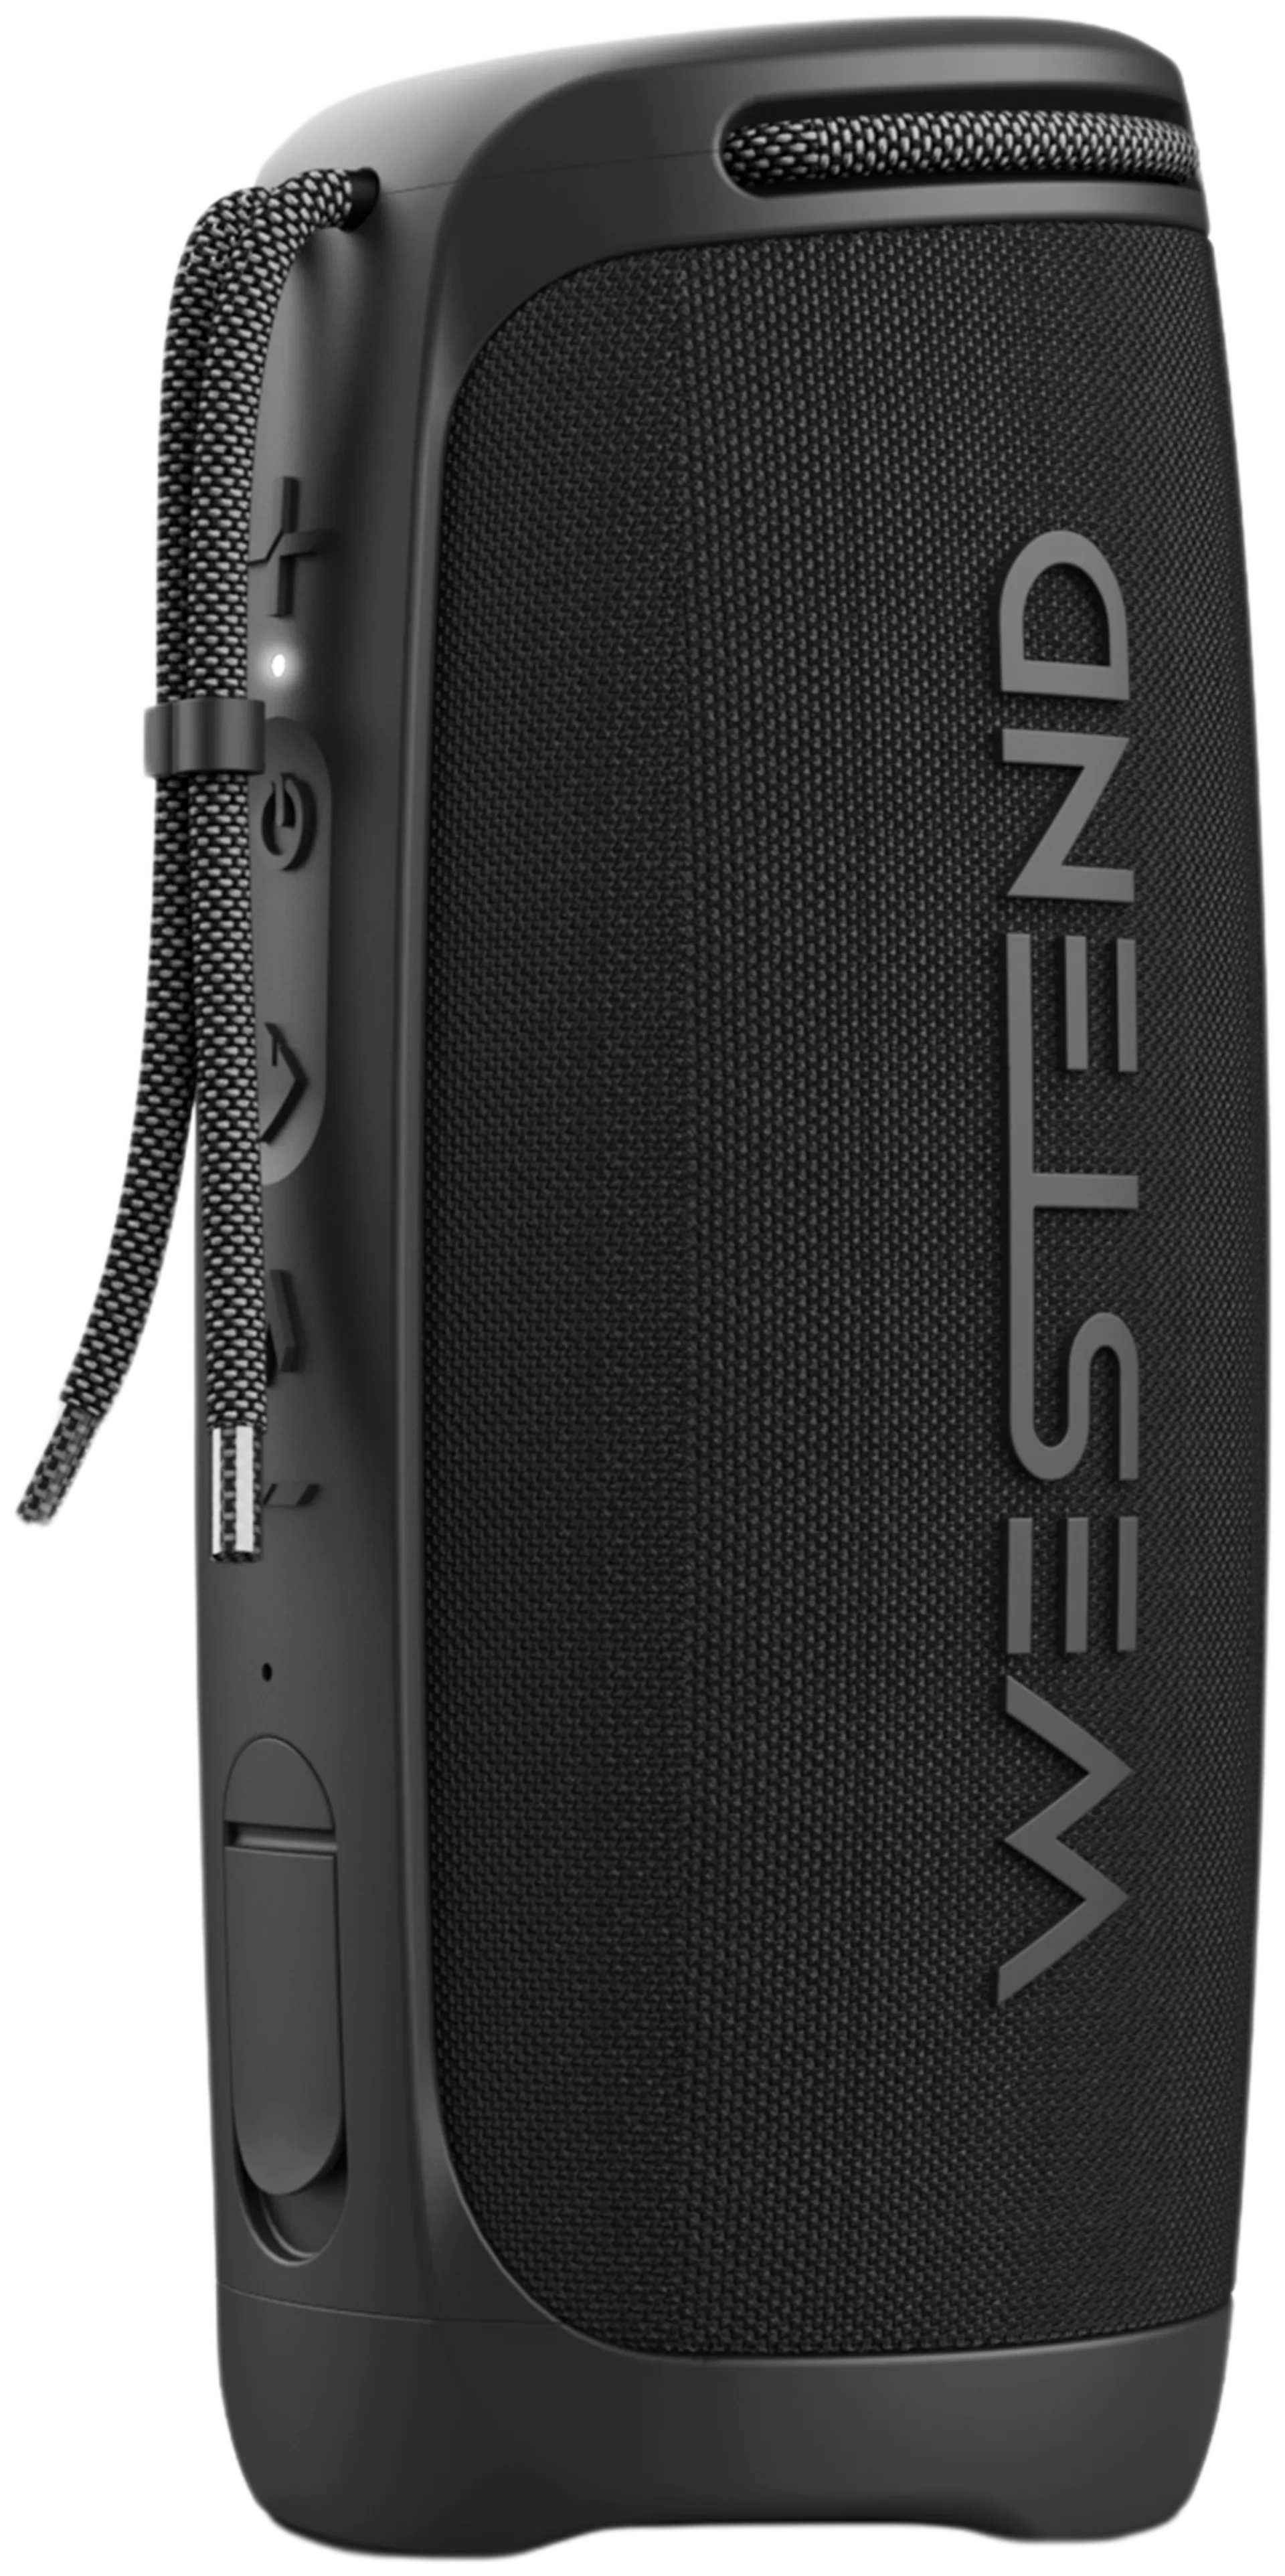 Westend Bluetooth kaiutin W20, musta - 1